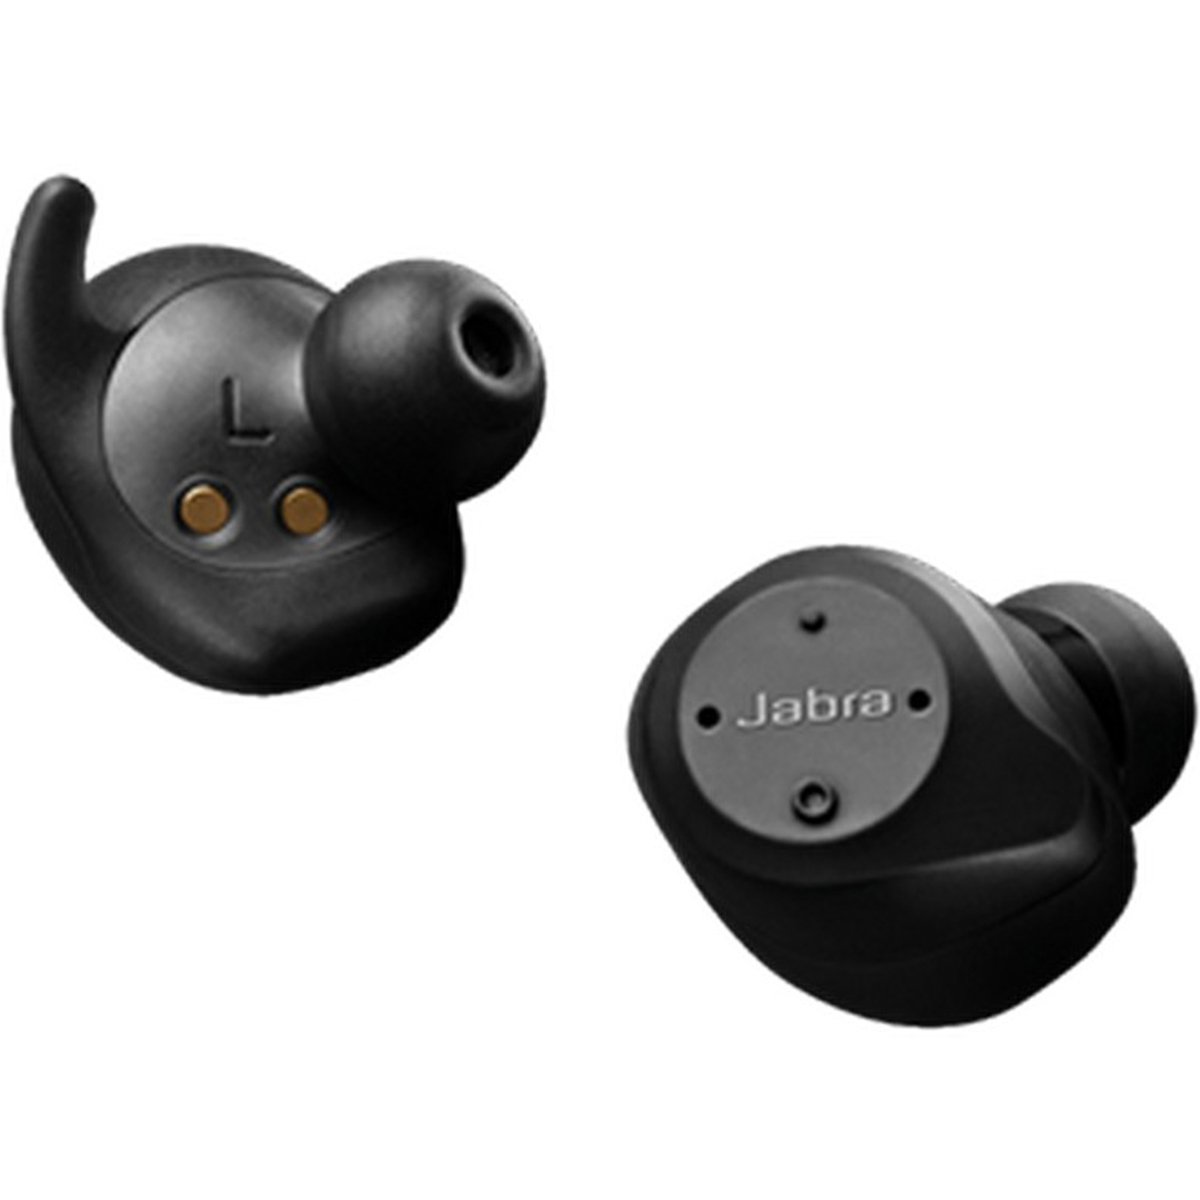 Jabra Elite Sport wireless earbuds